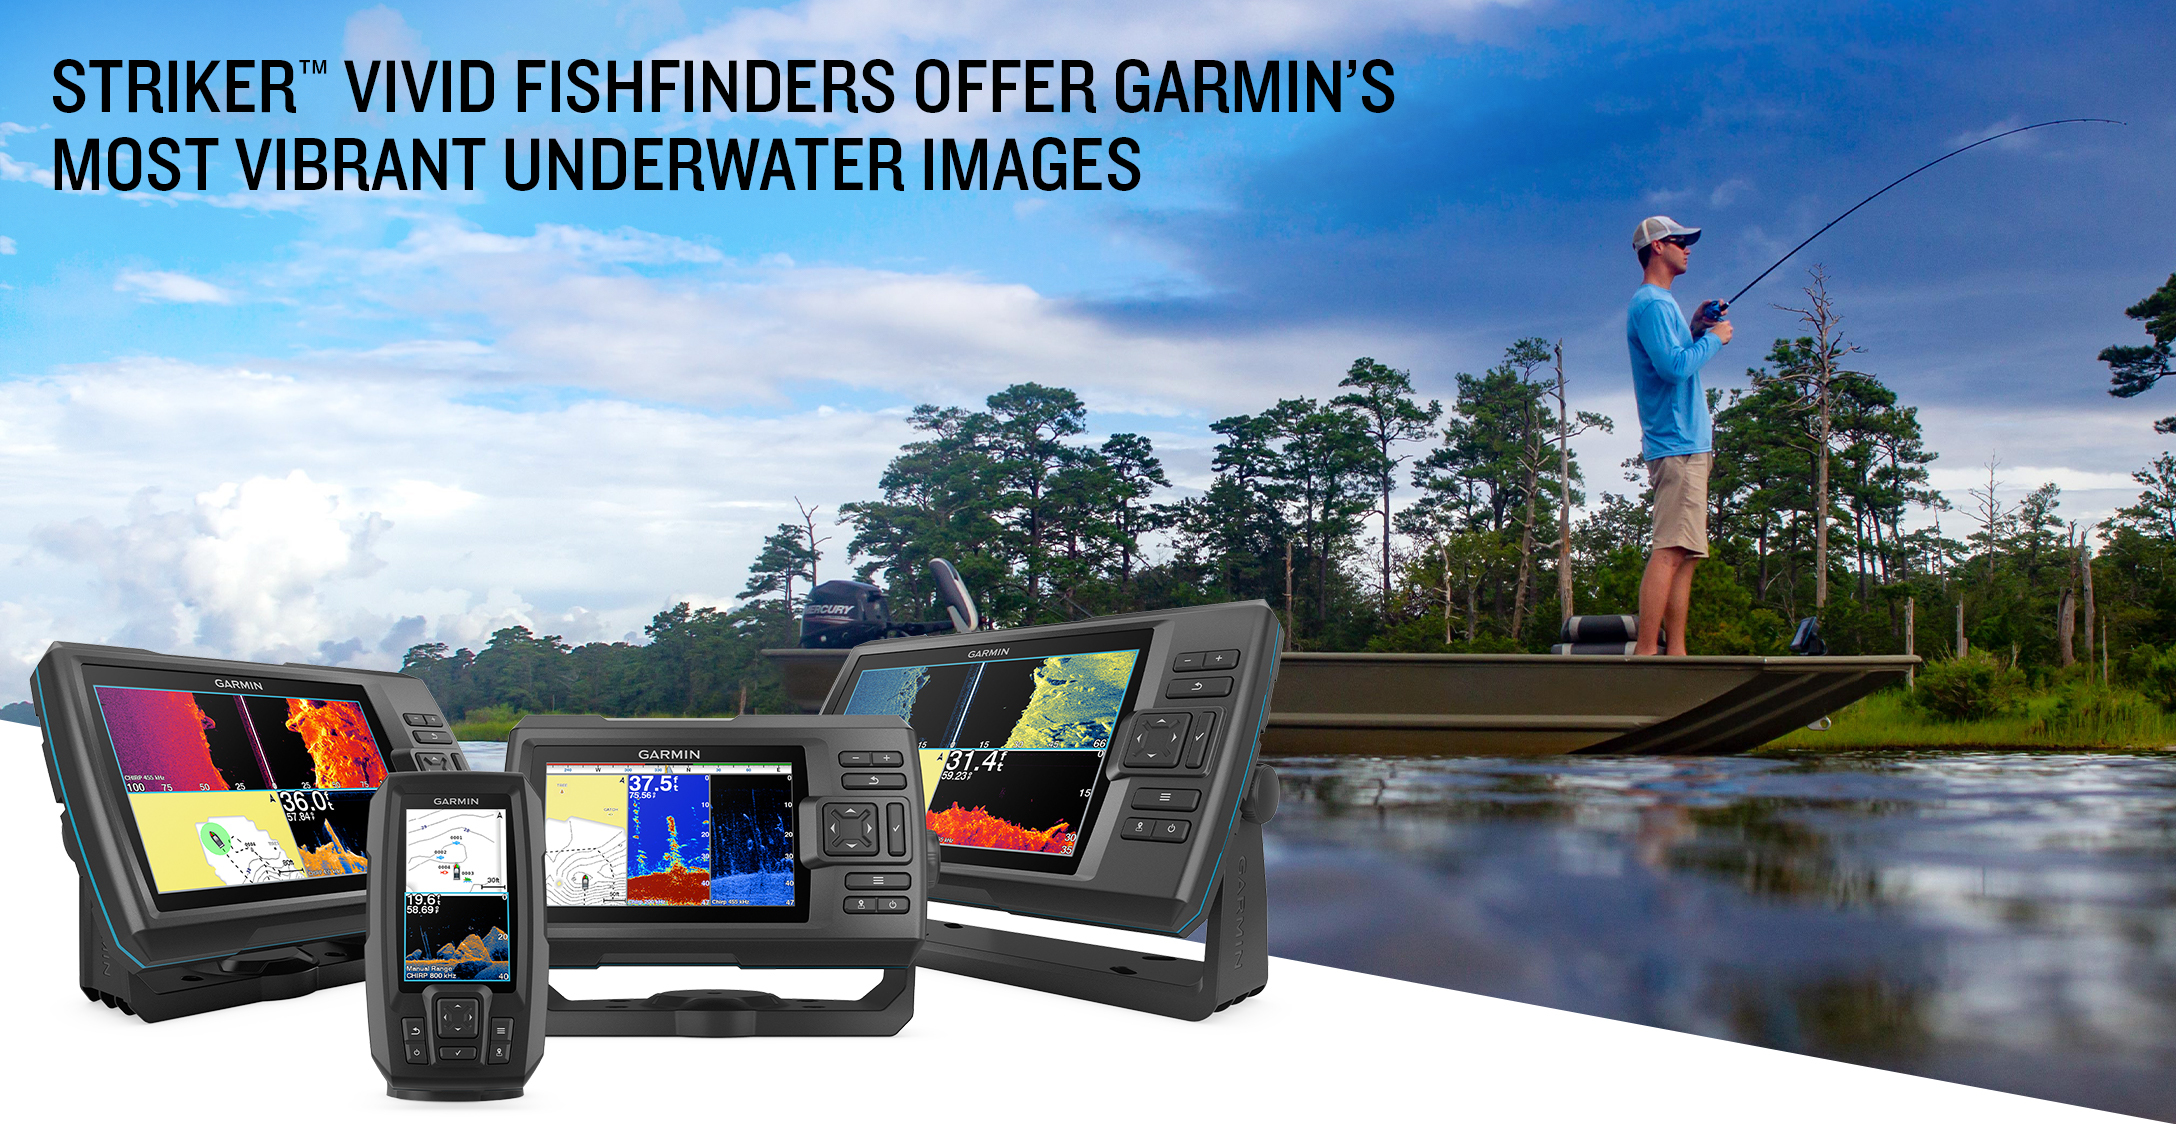 New STRIKER Vivid fishfinders offer Garmin's most vibrant underwater images  to date